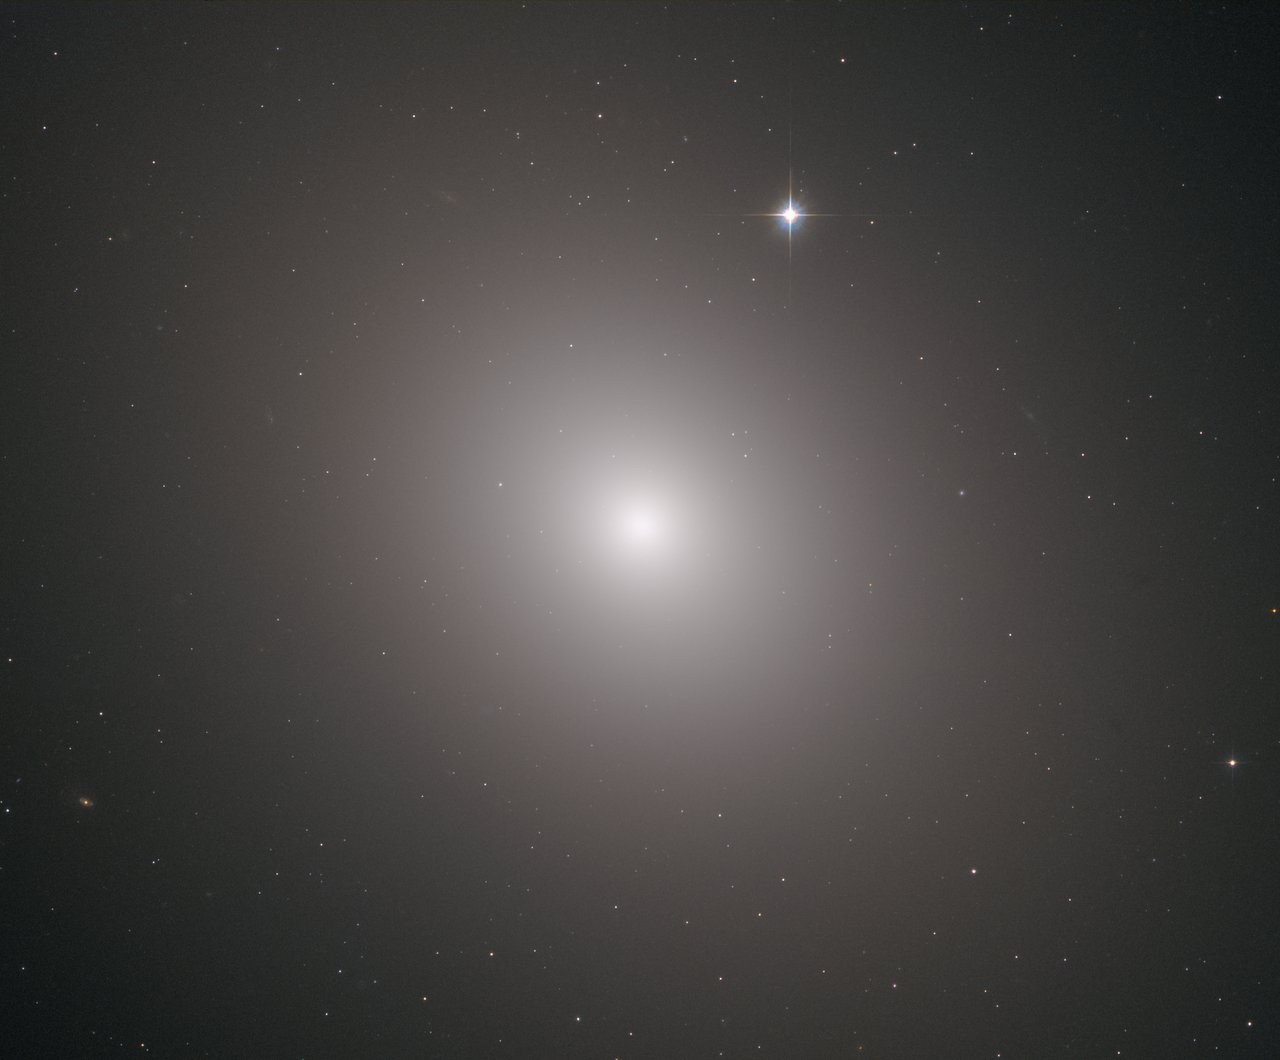 Galáxia com 200 bilhões de estrelas (Foto: ESA/Hubble & NASA, J. Blakenslee, P. Cote et al.)